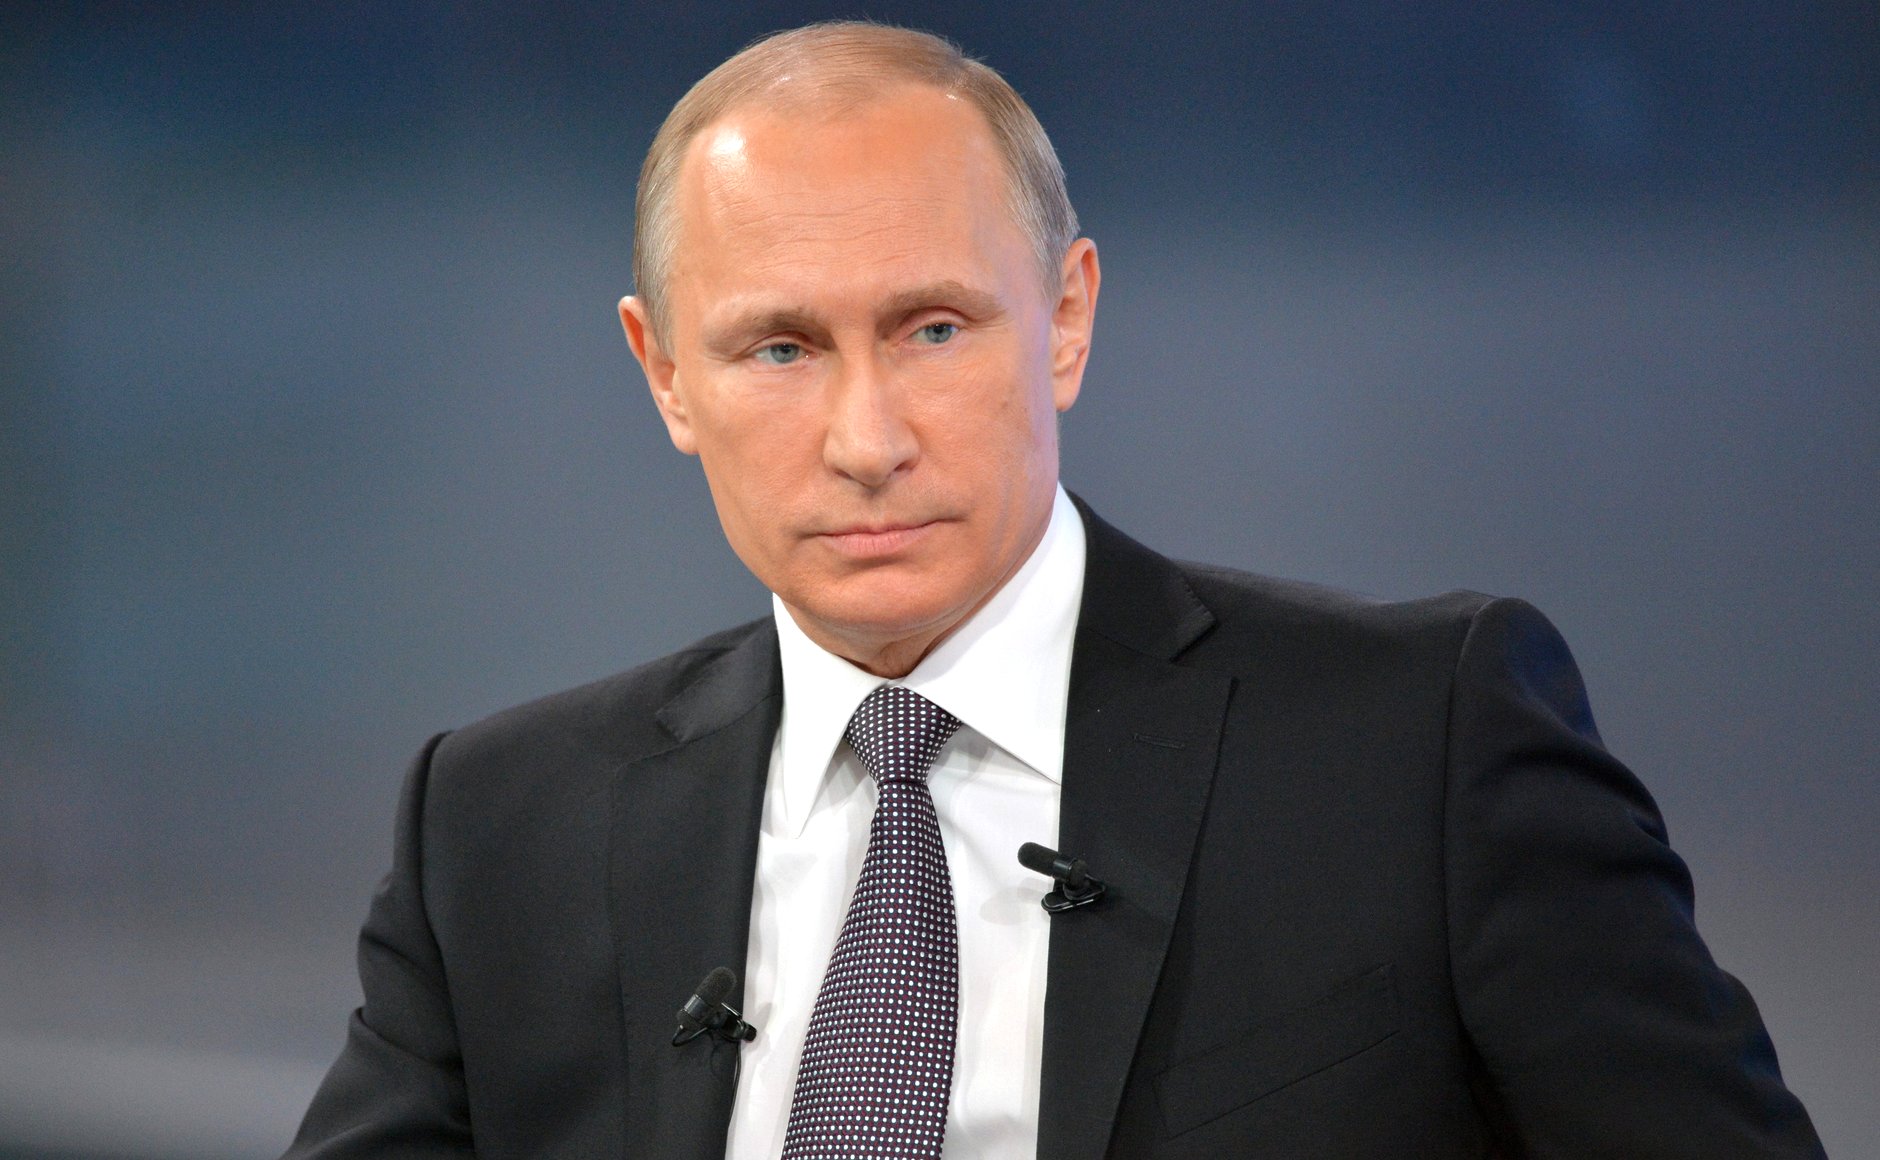 Путин: Cанкции США «хамство»
